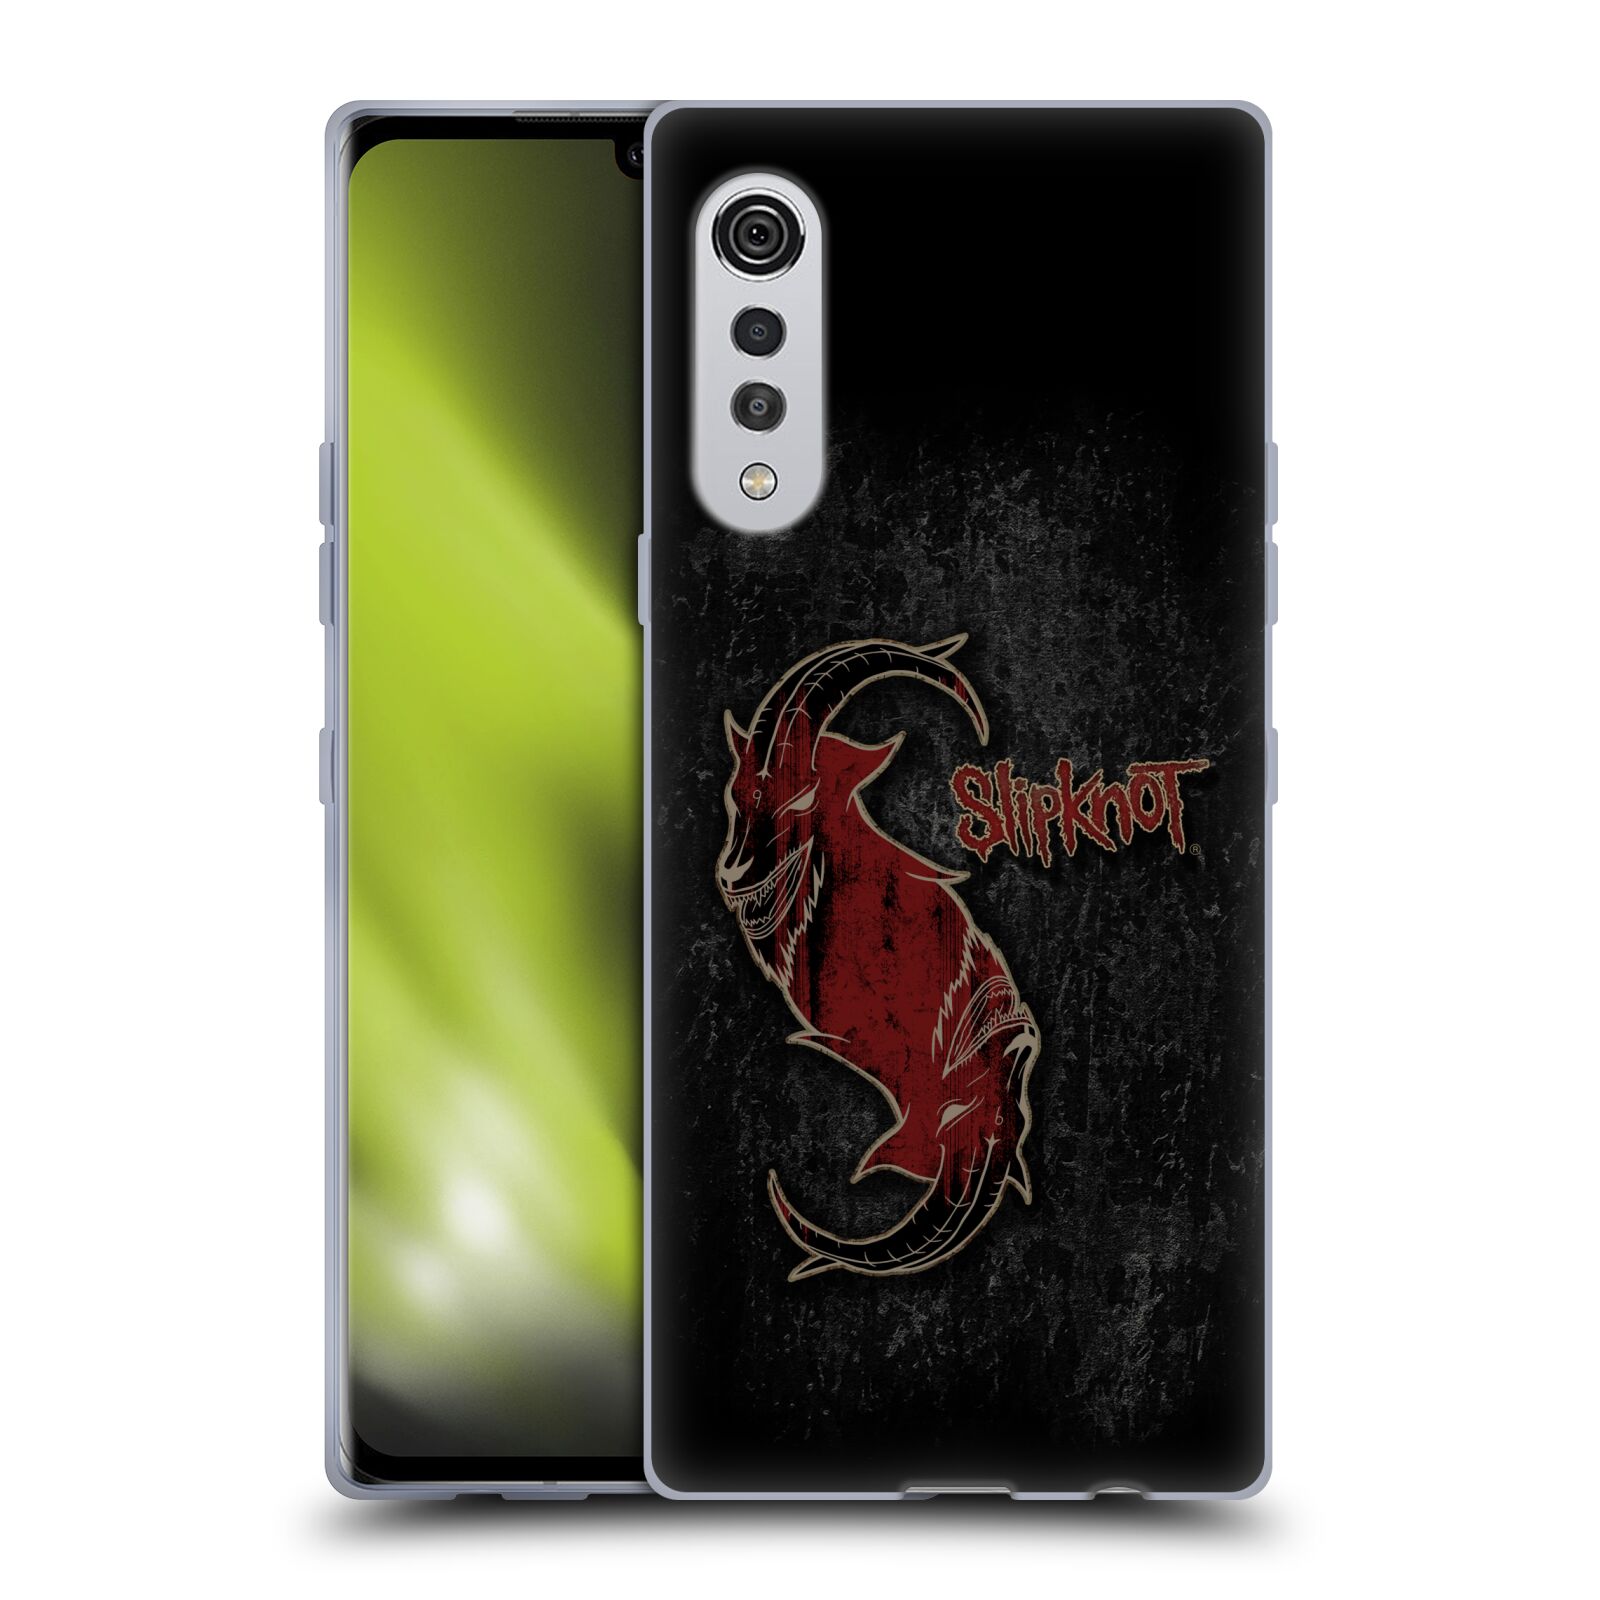 Silikonové pouzdro na mobil LG Velvet - Head Case - Slipknot - Rudý kozel